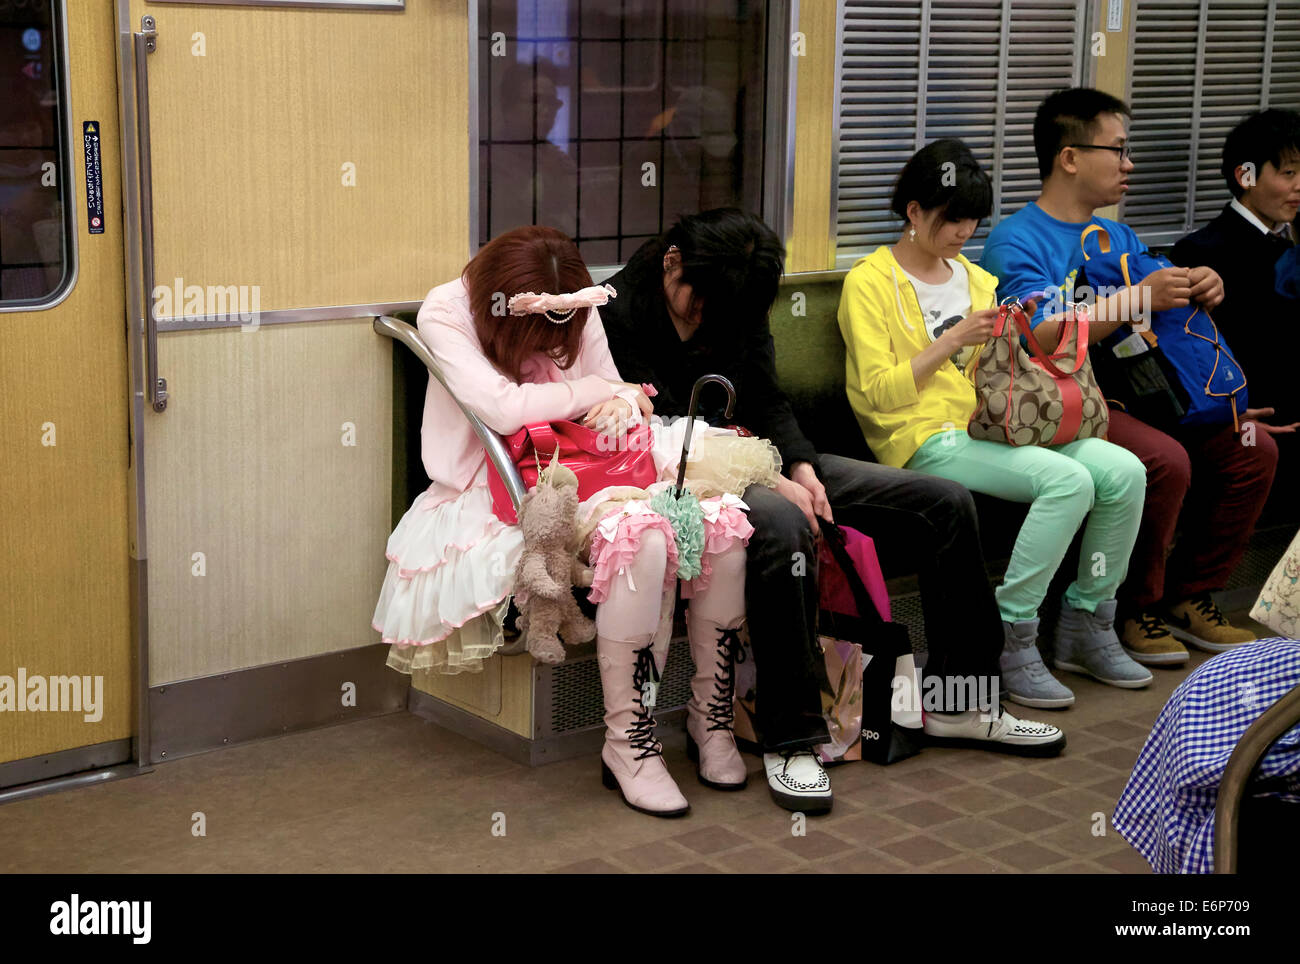 Young japanese people sleeping, traveling on subway train. Japan, Asia Stock Photo